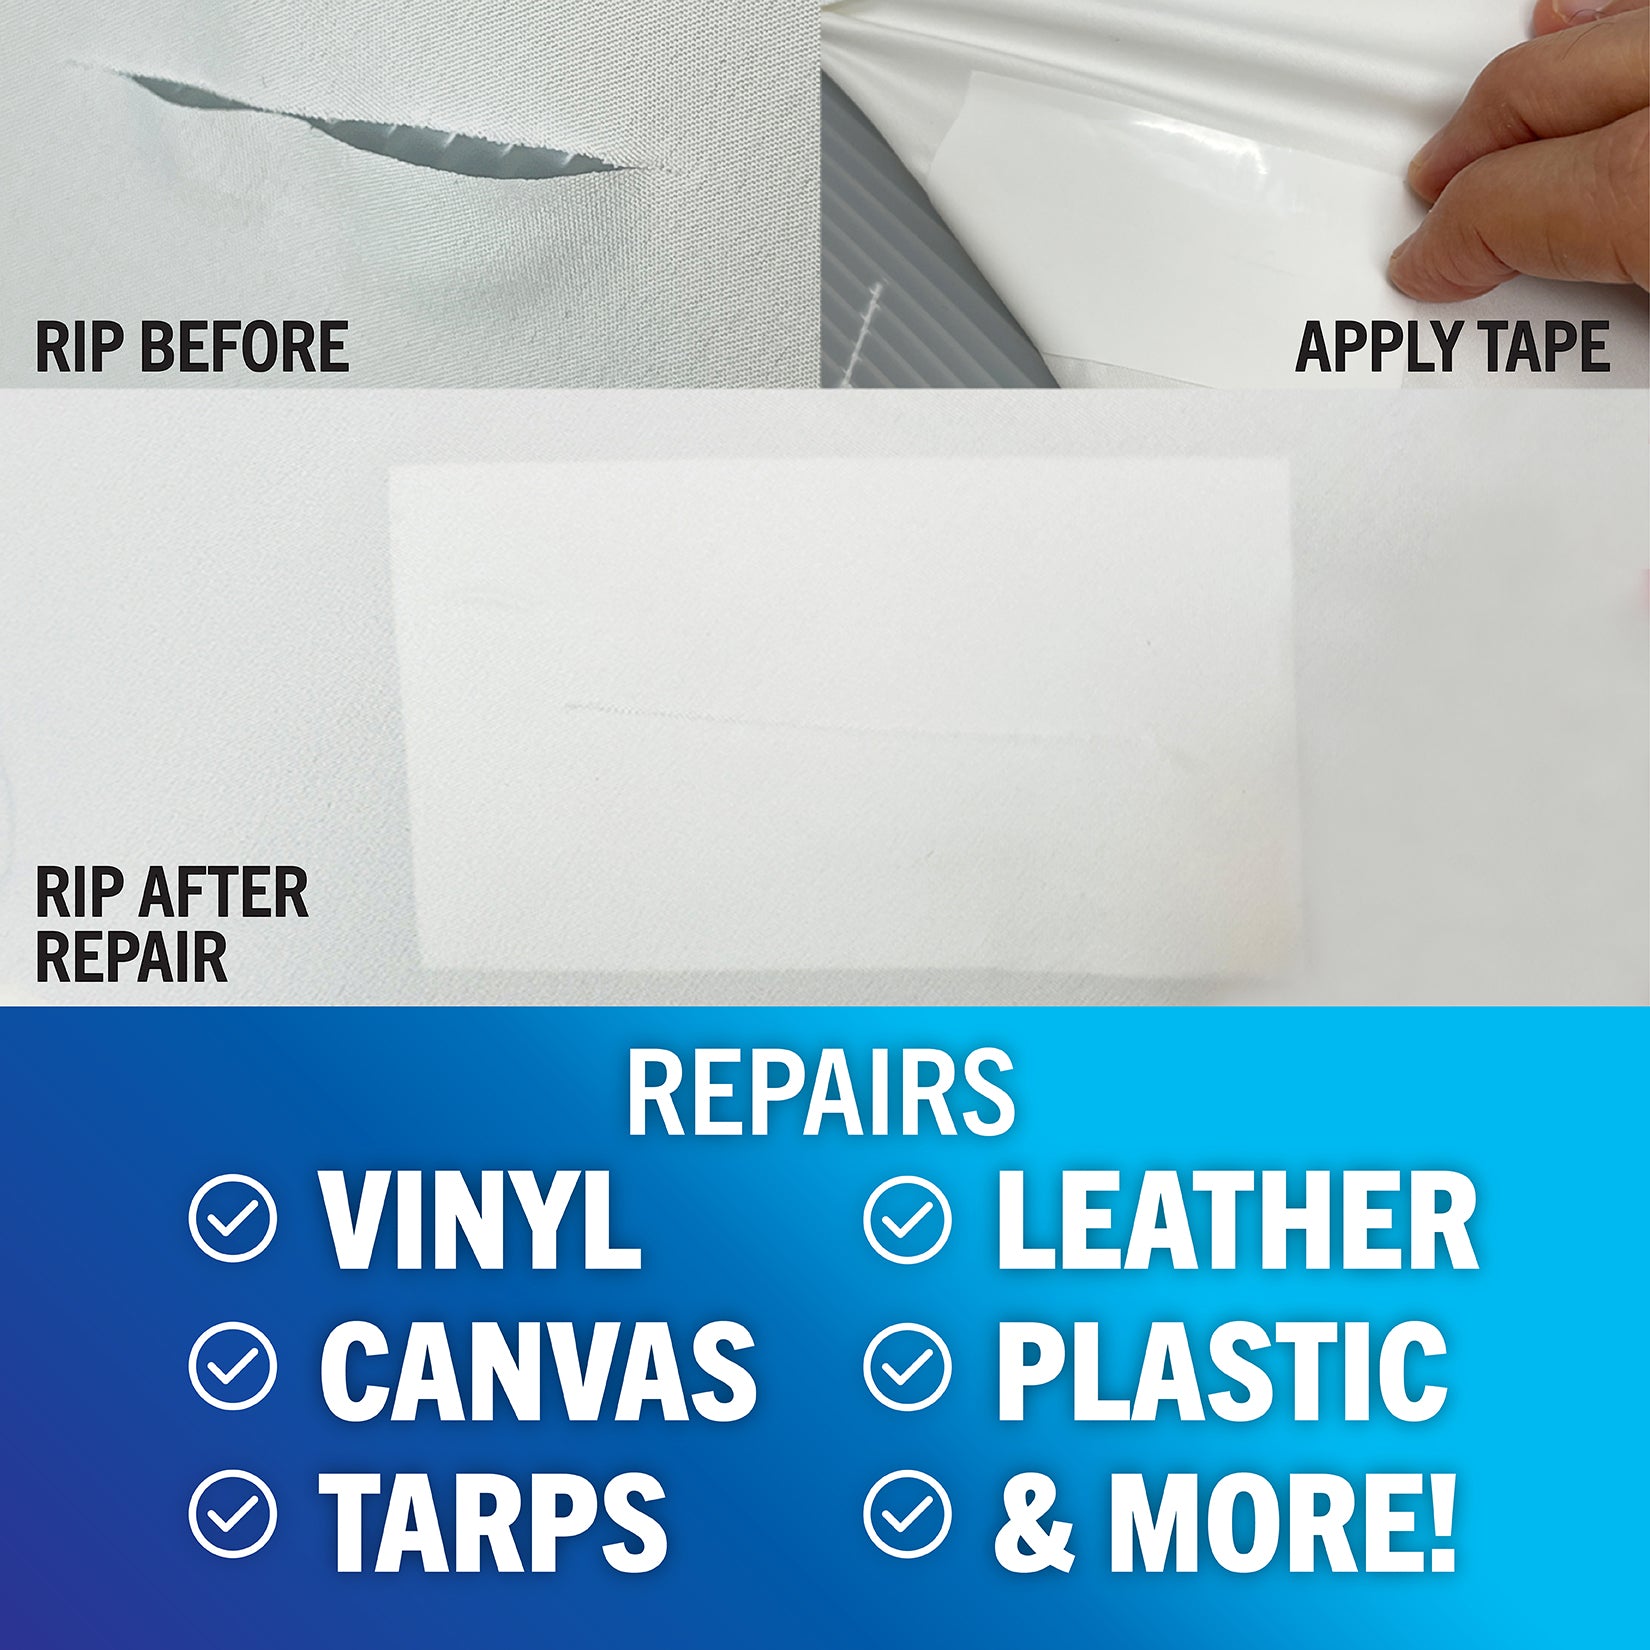 Dulepax-Fabric Repair Tape,Boat covers Repair Tape,Tent Repair Tape,Awning  Repair Tape,RV covers